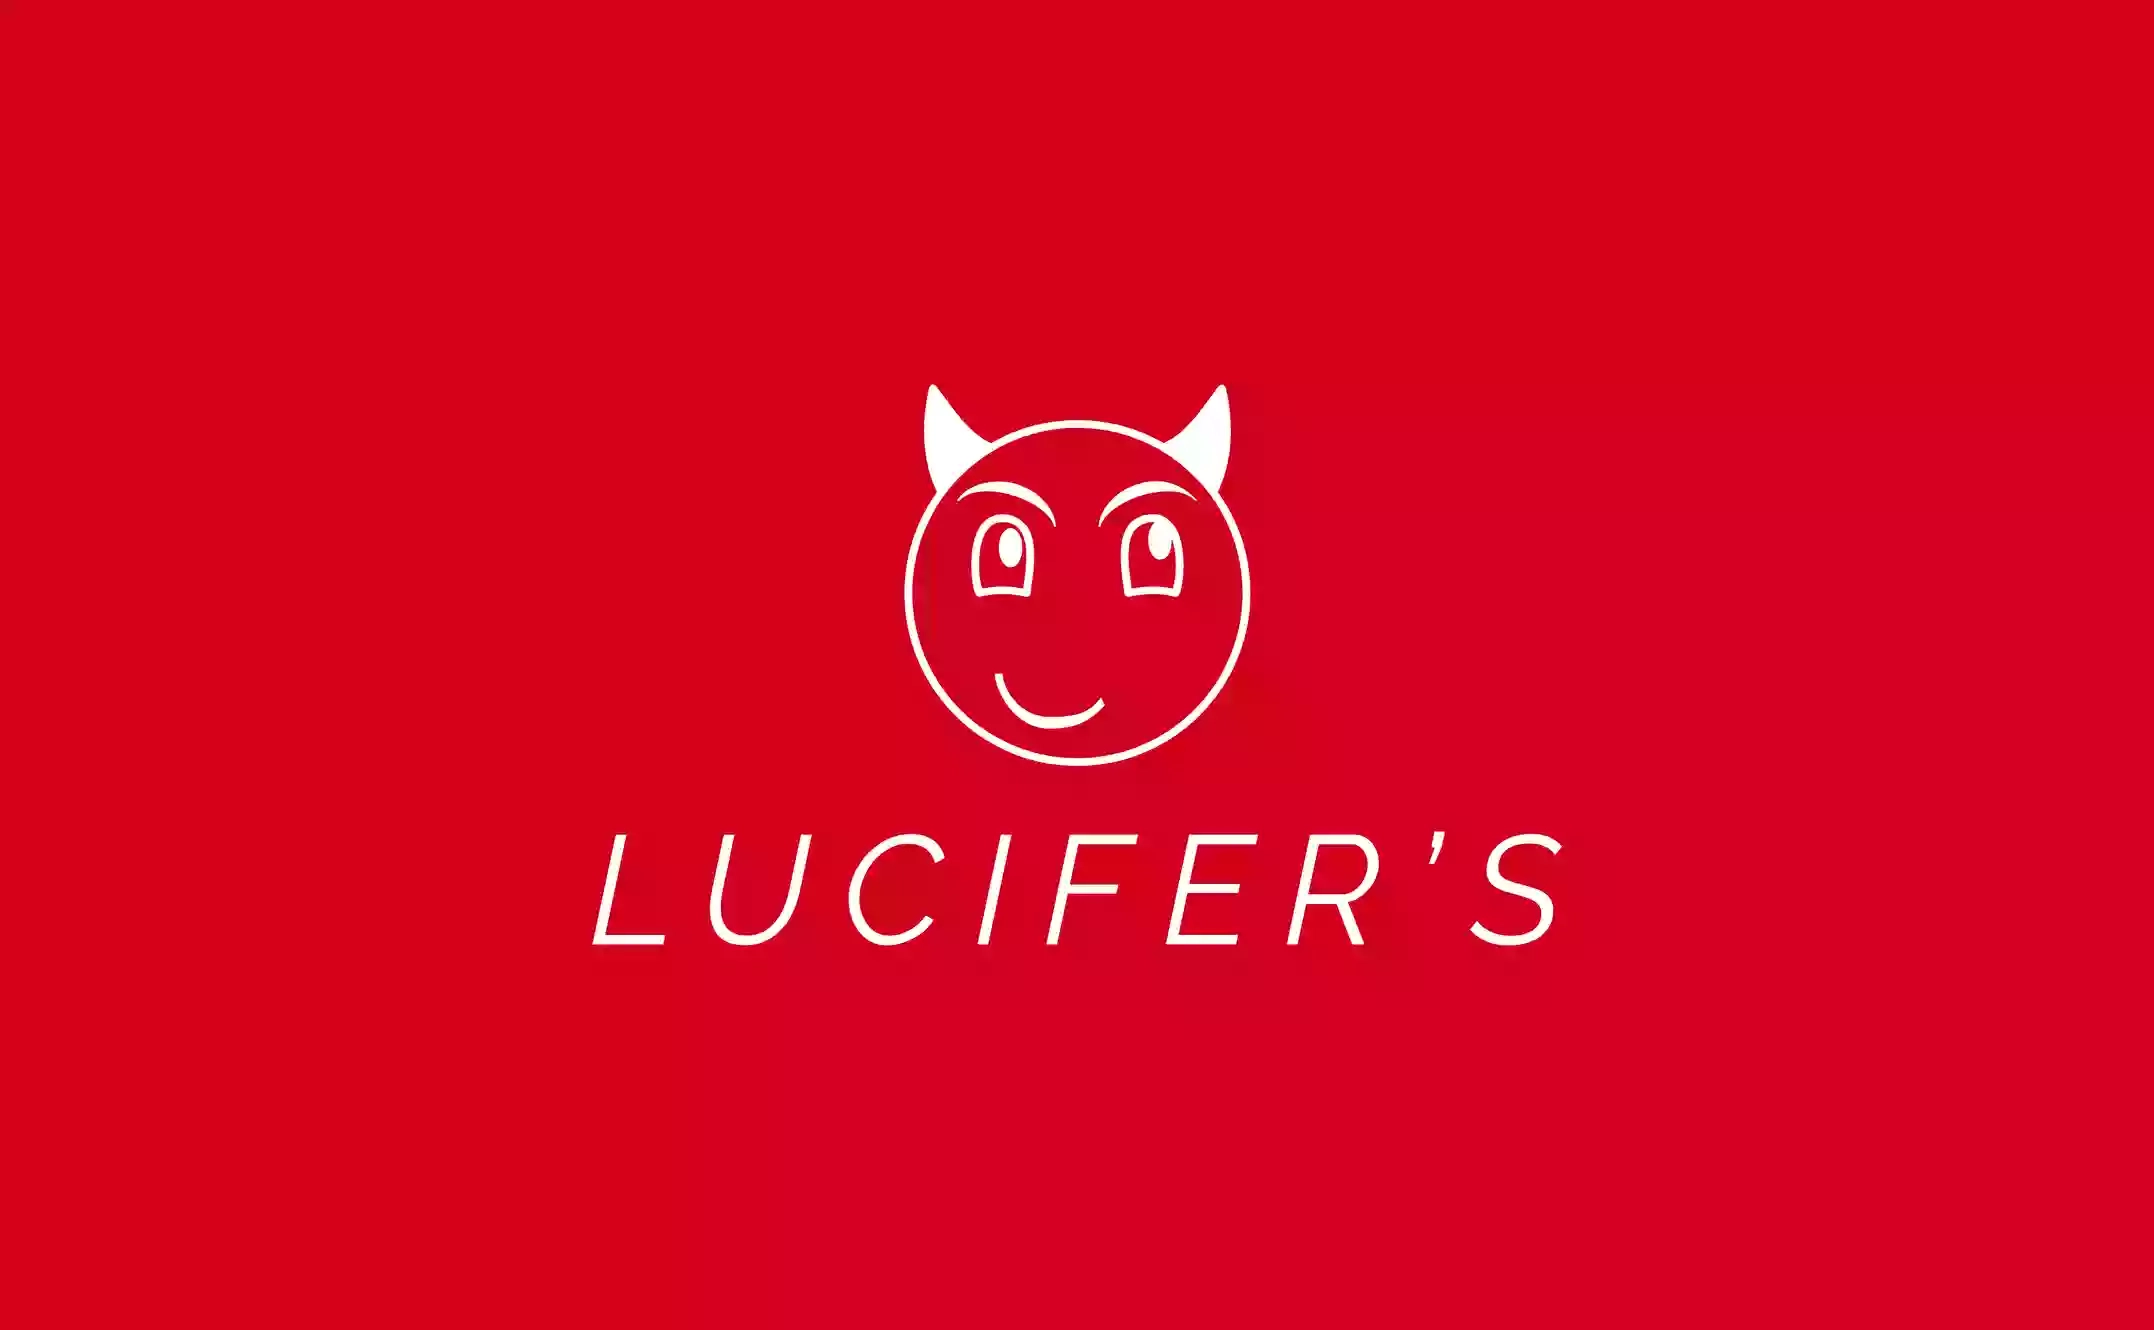 Lucifer’s